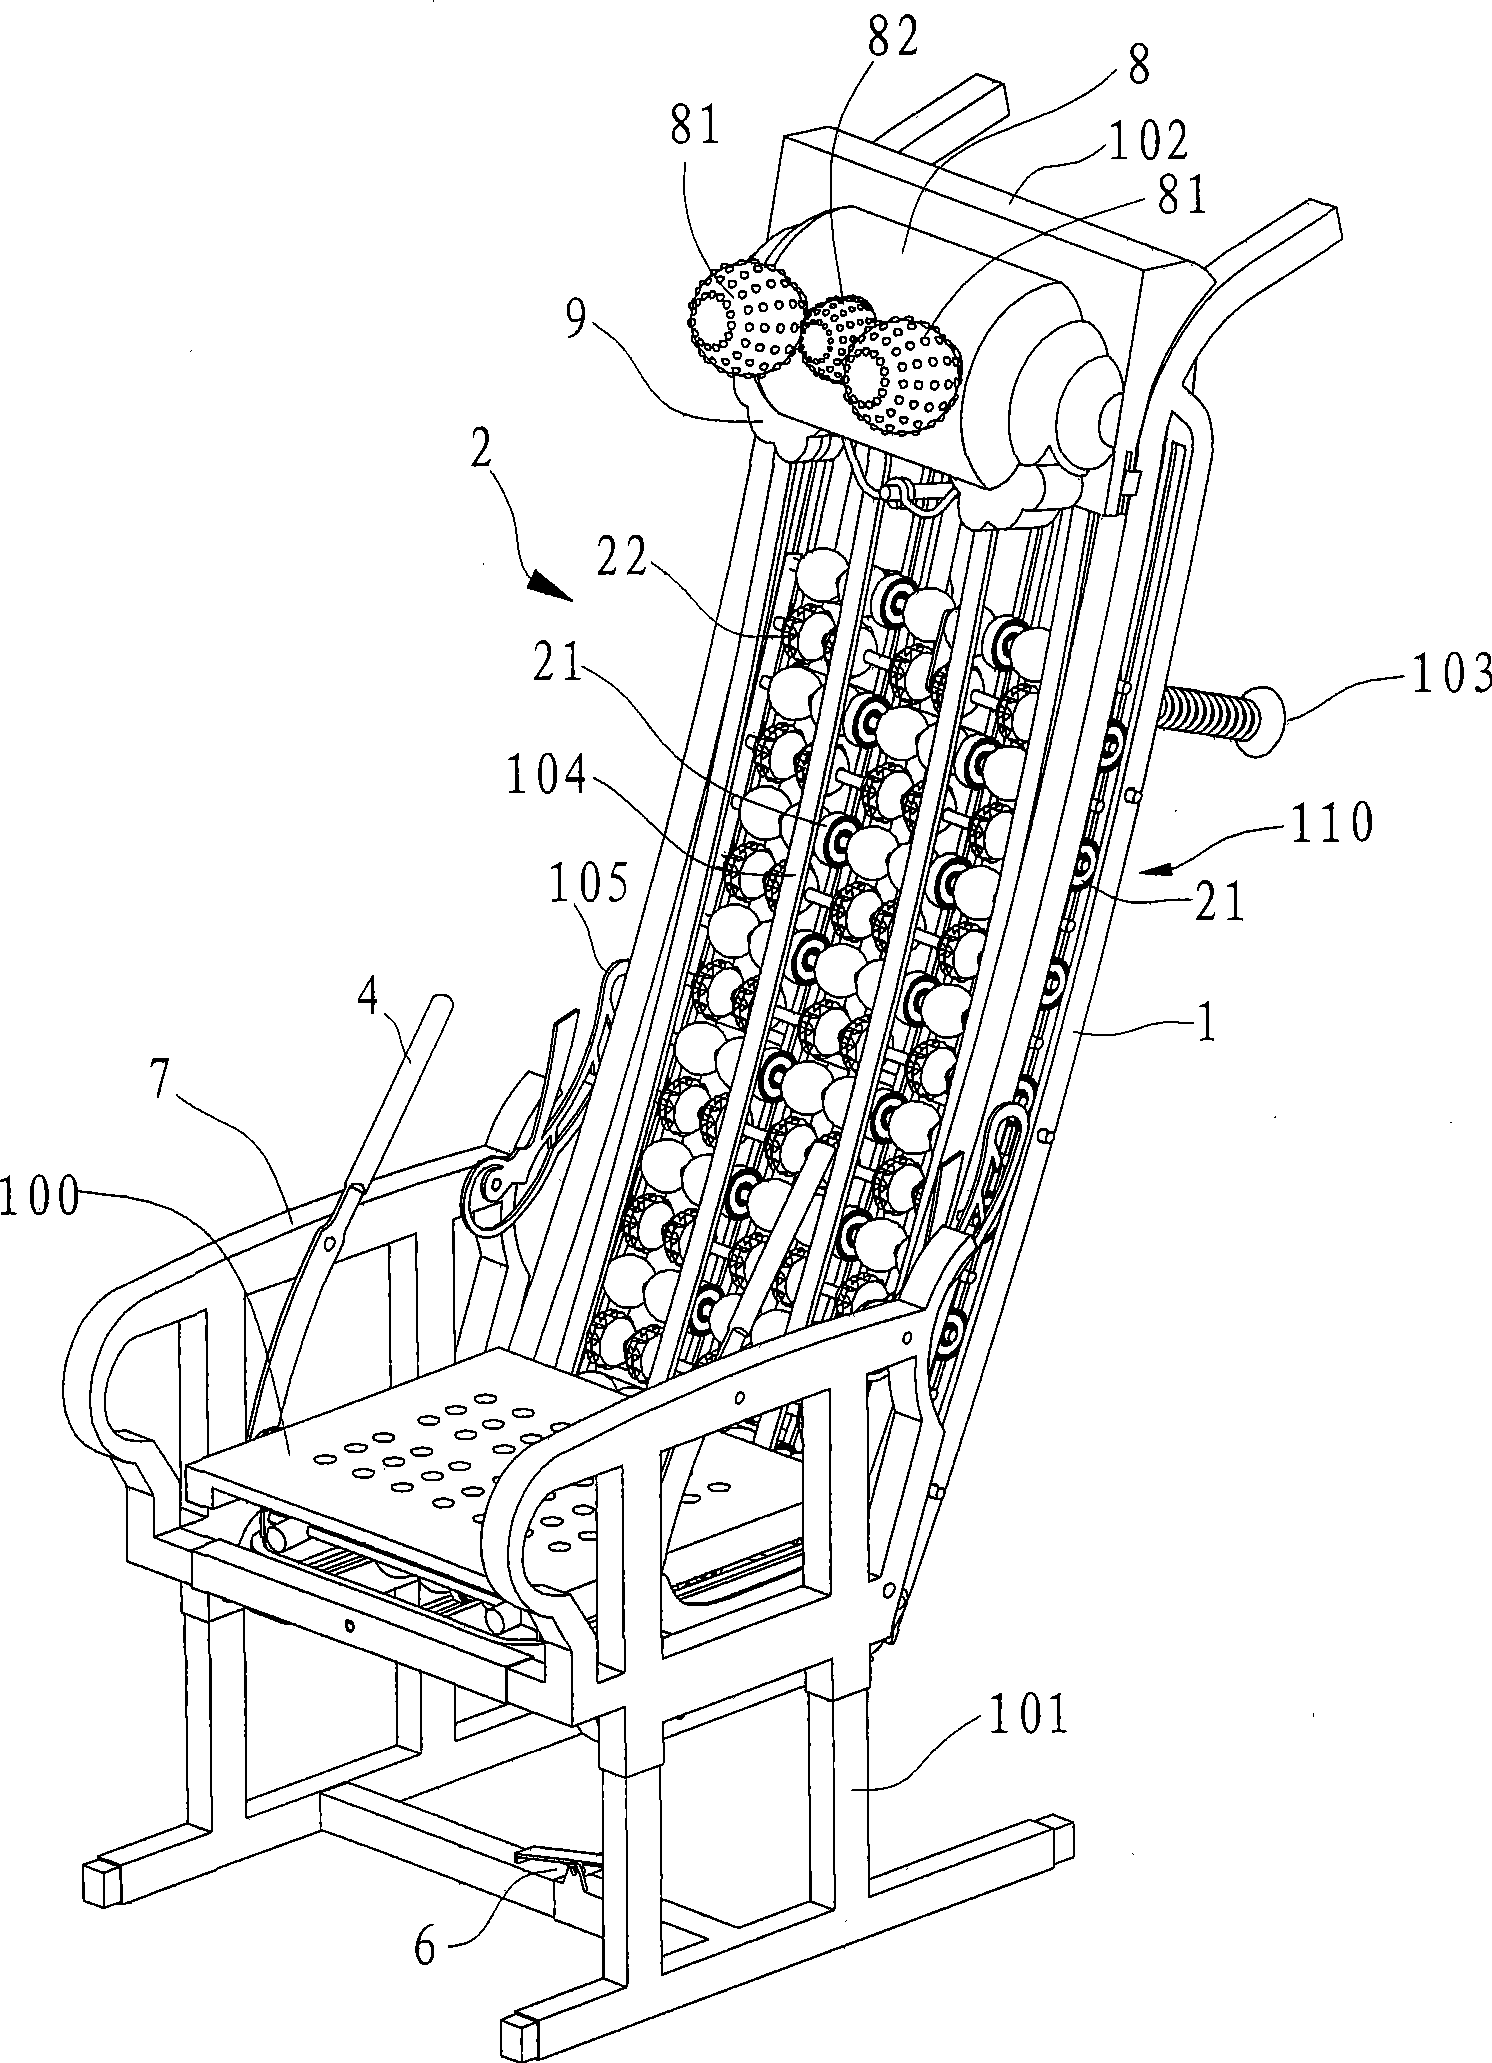 Bath-massage chair